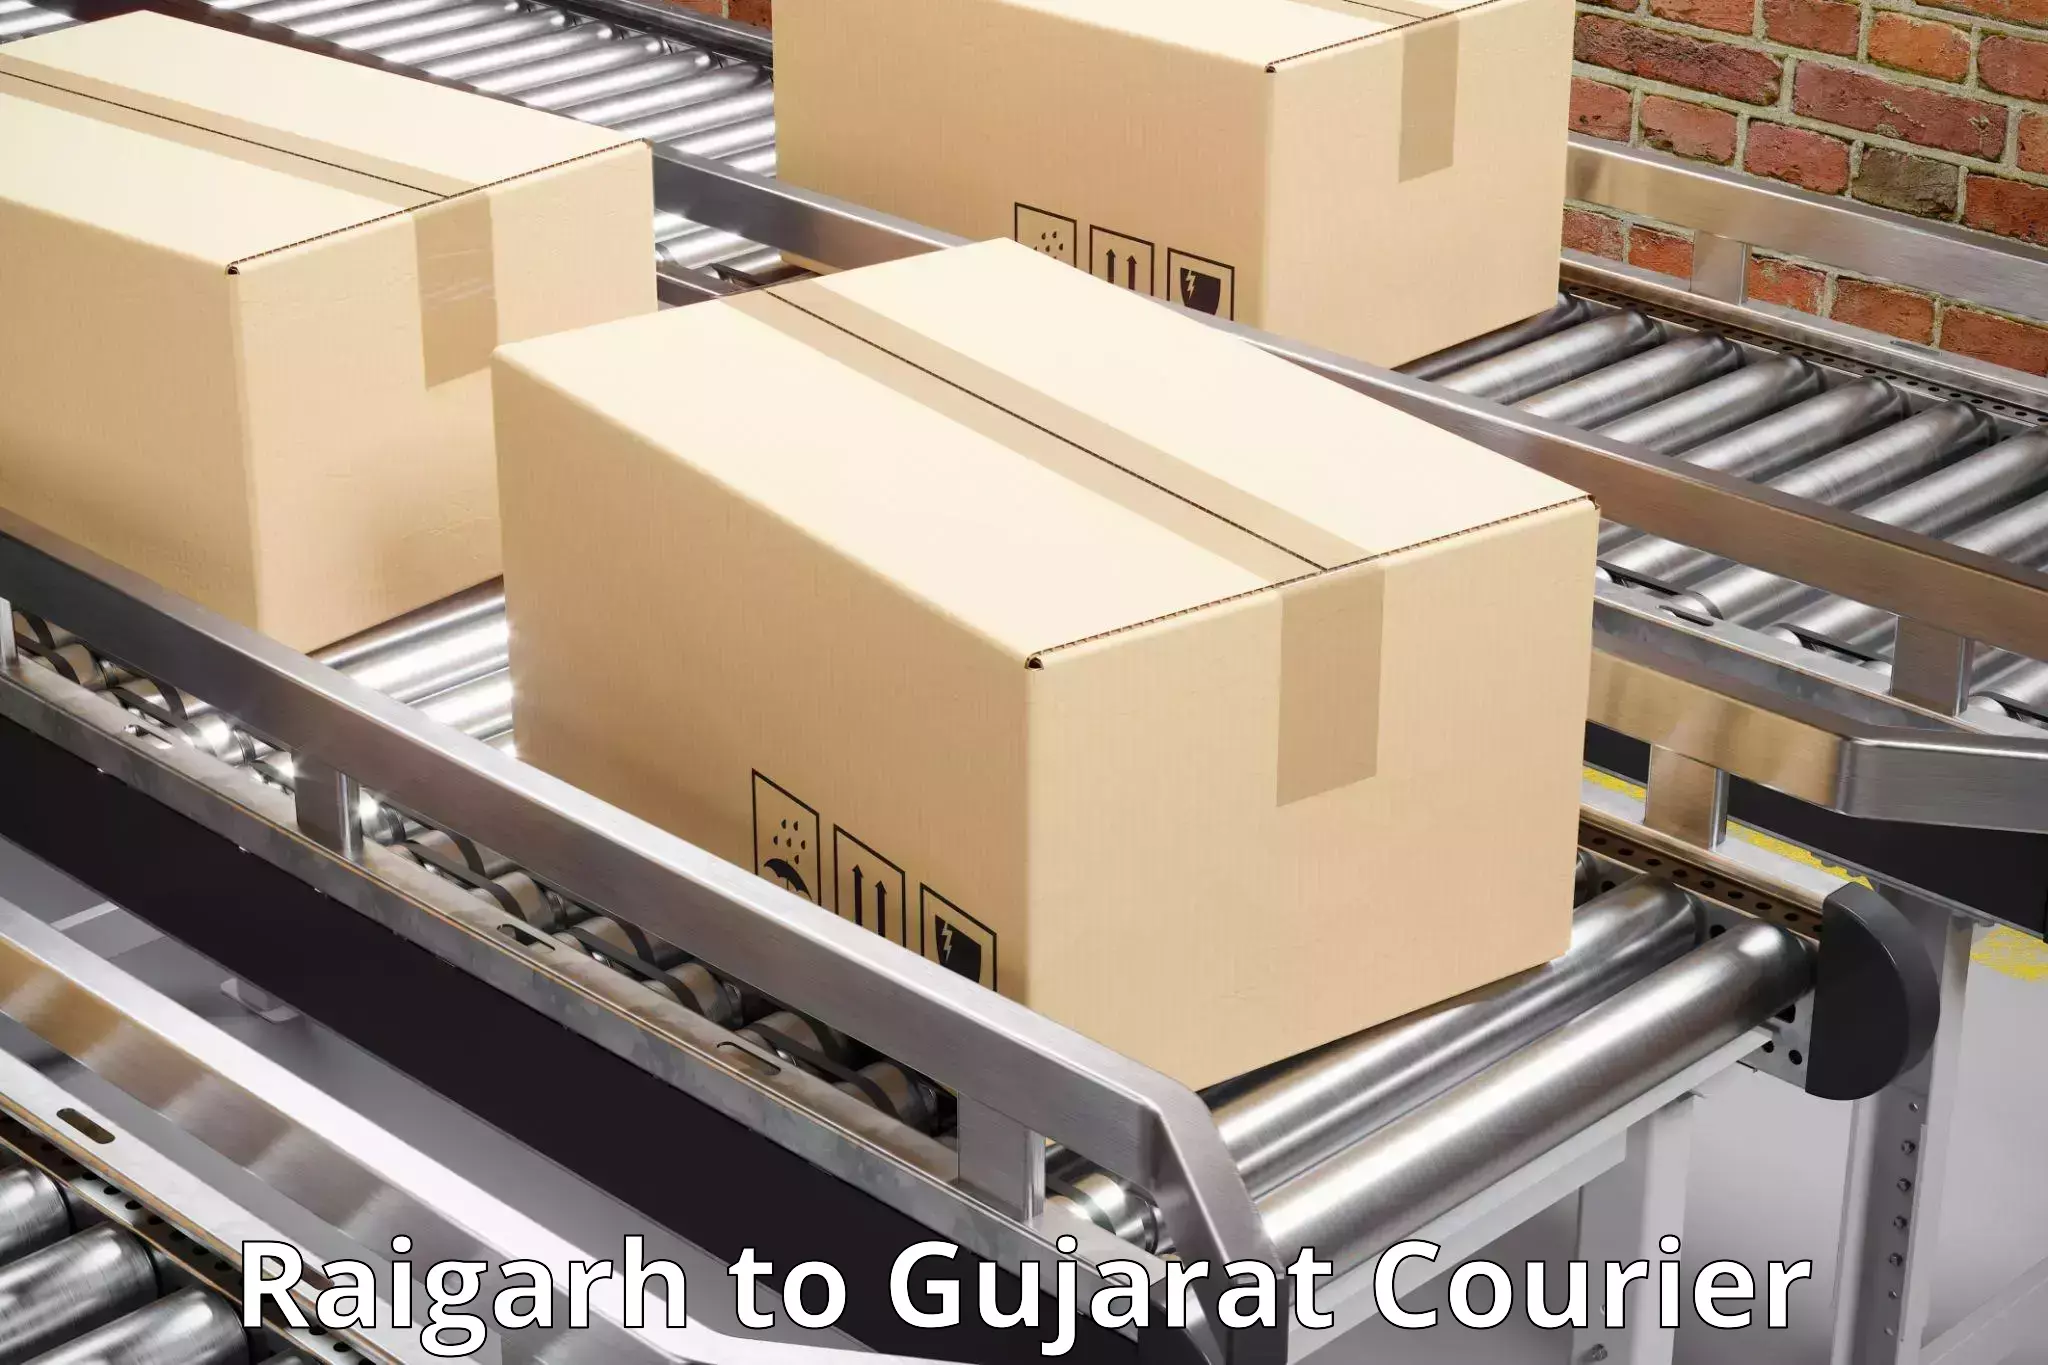 Courier service booking Raigarh to Jasdan